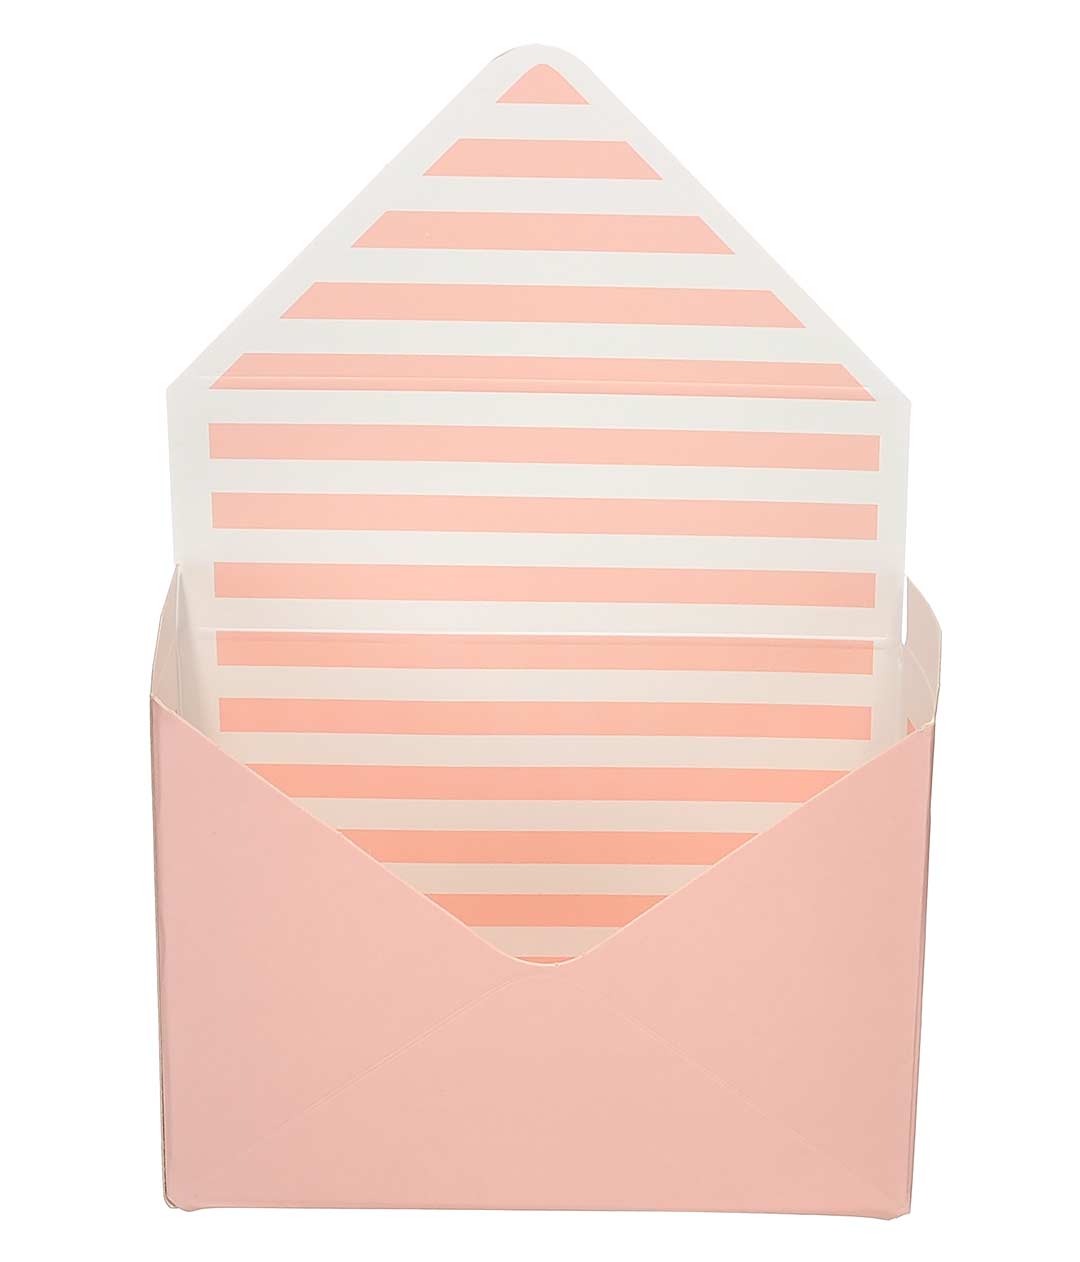 Изображение Коробка-конверт рожева з білими смугами